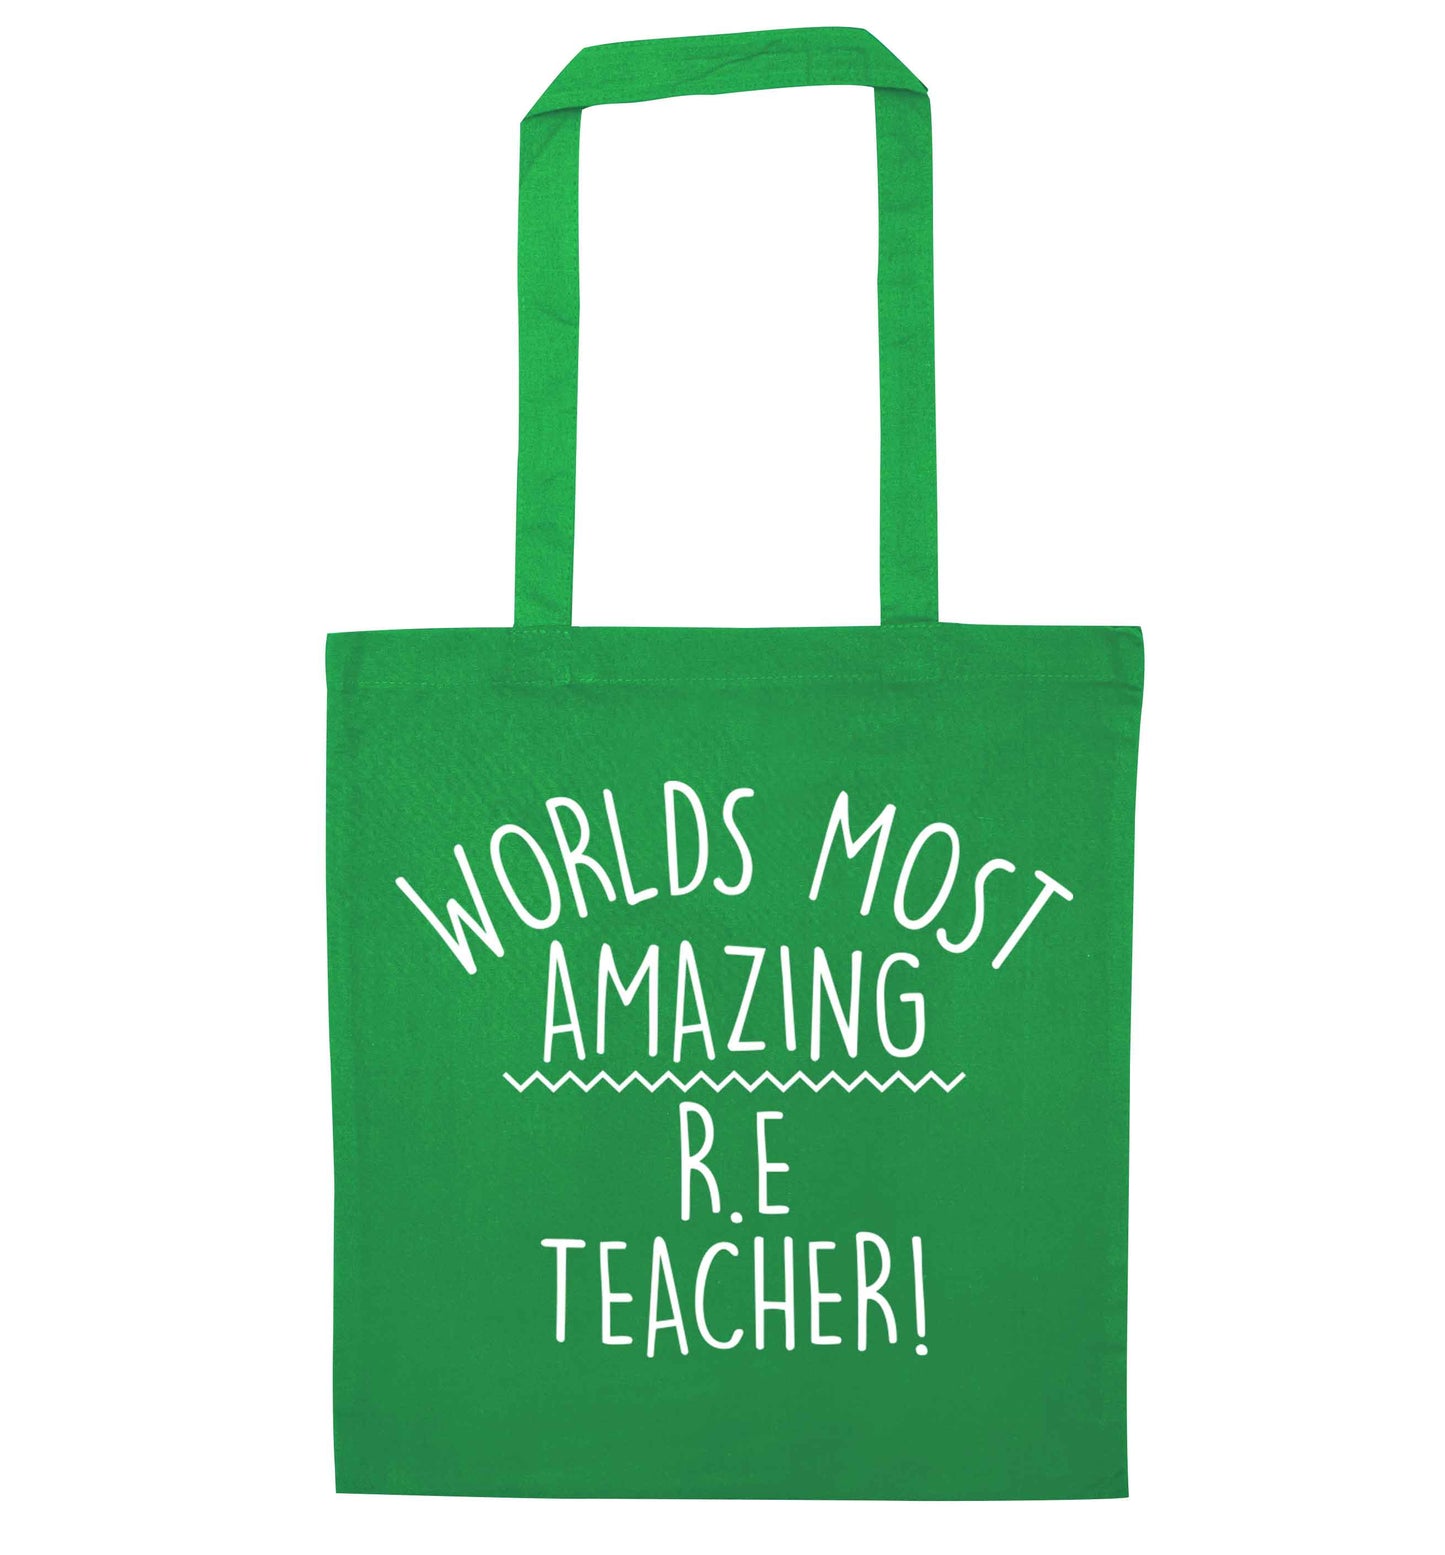 Worlds most amazing R.E teacher green tote bag